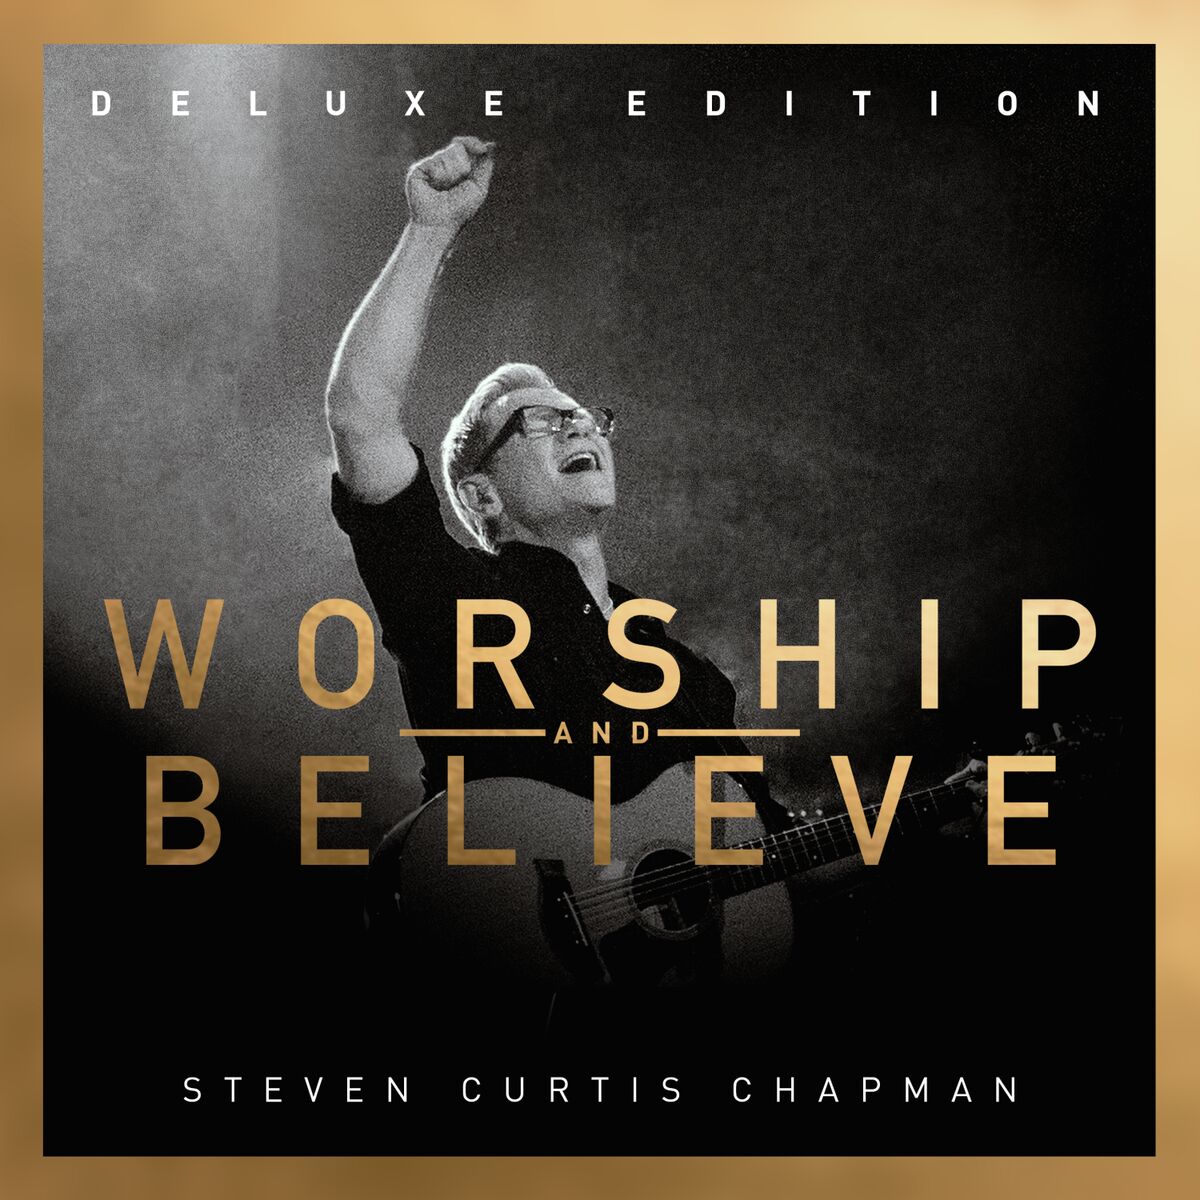 Steven Curtis Chapman's music album cover